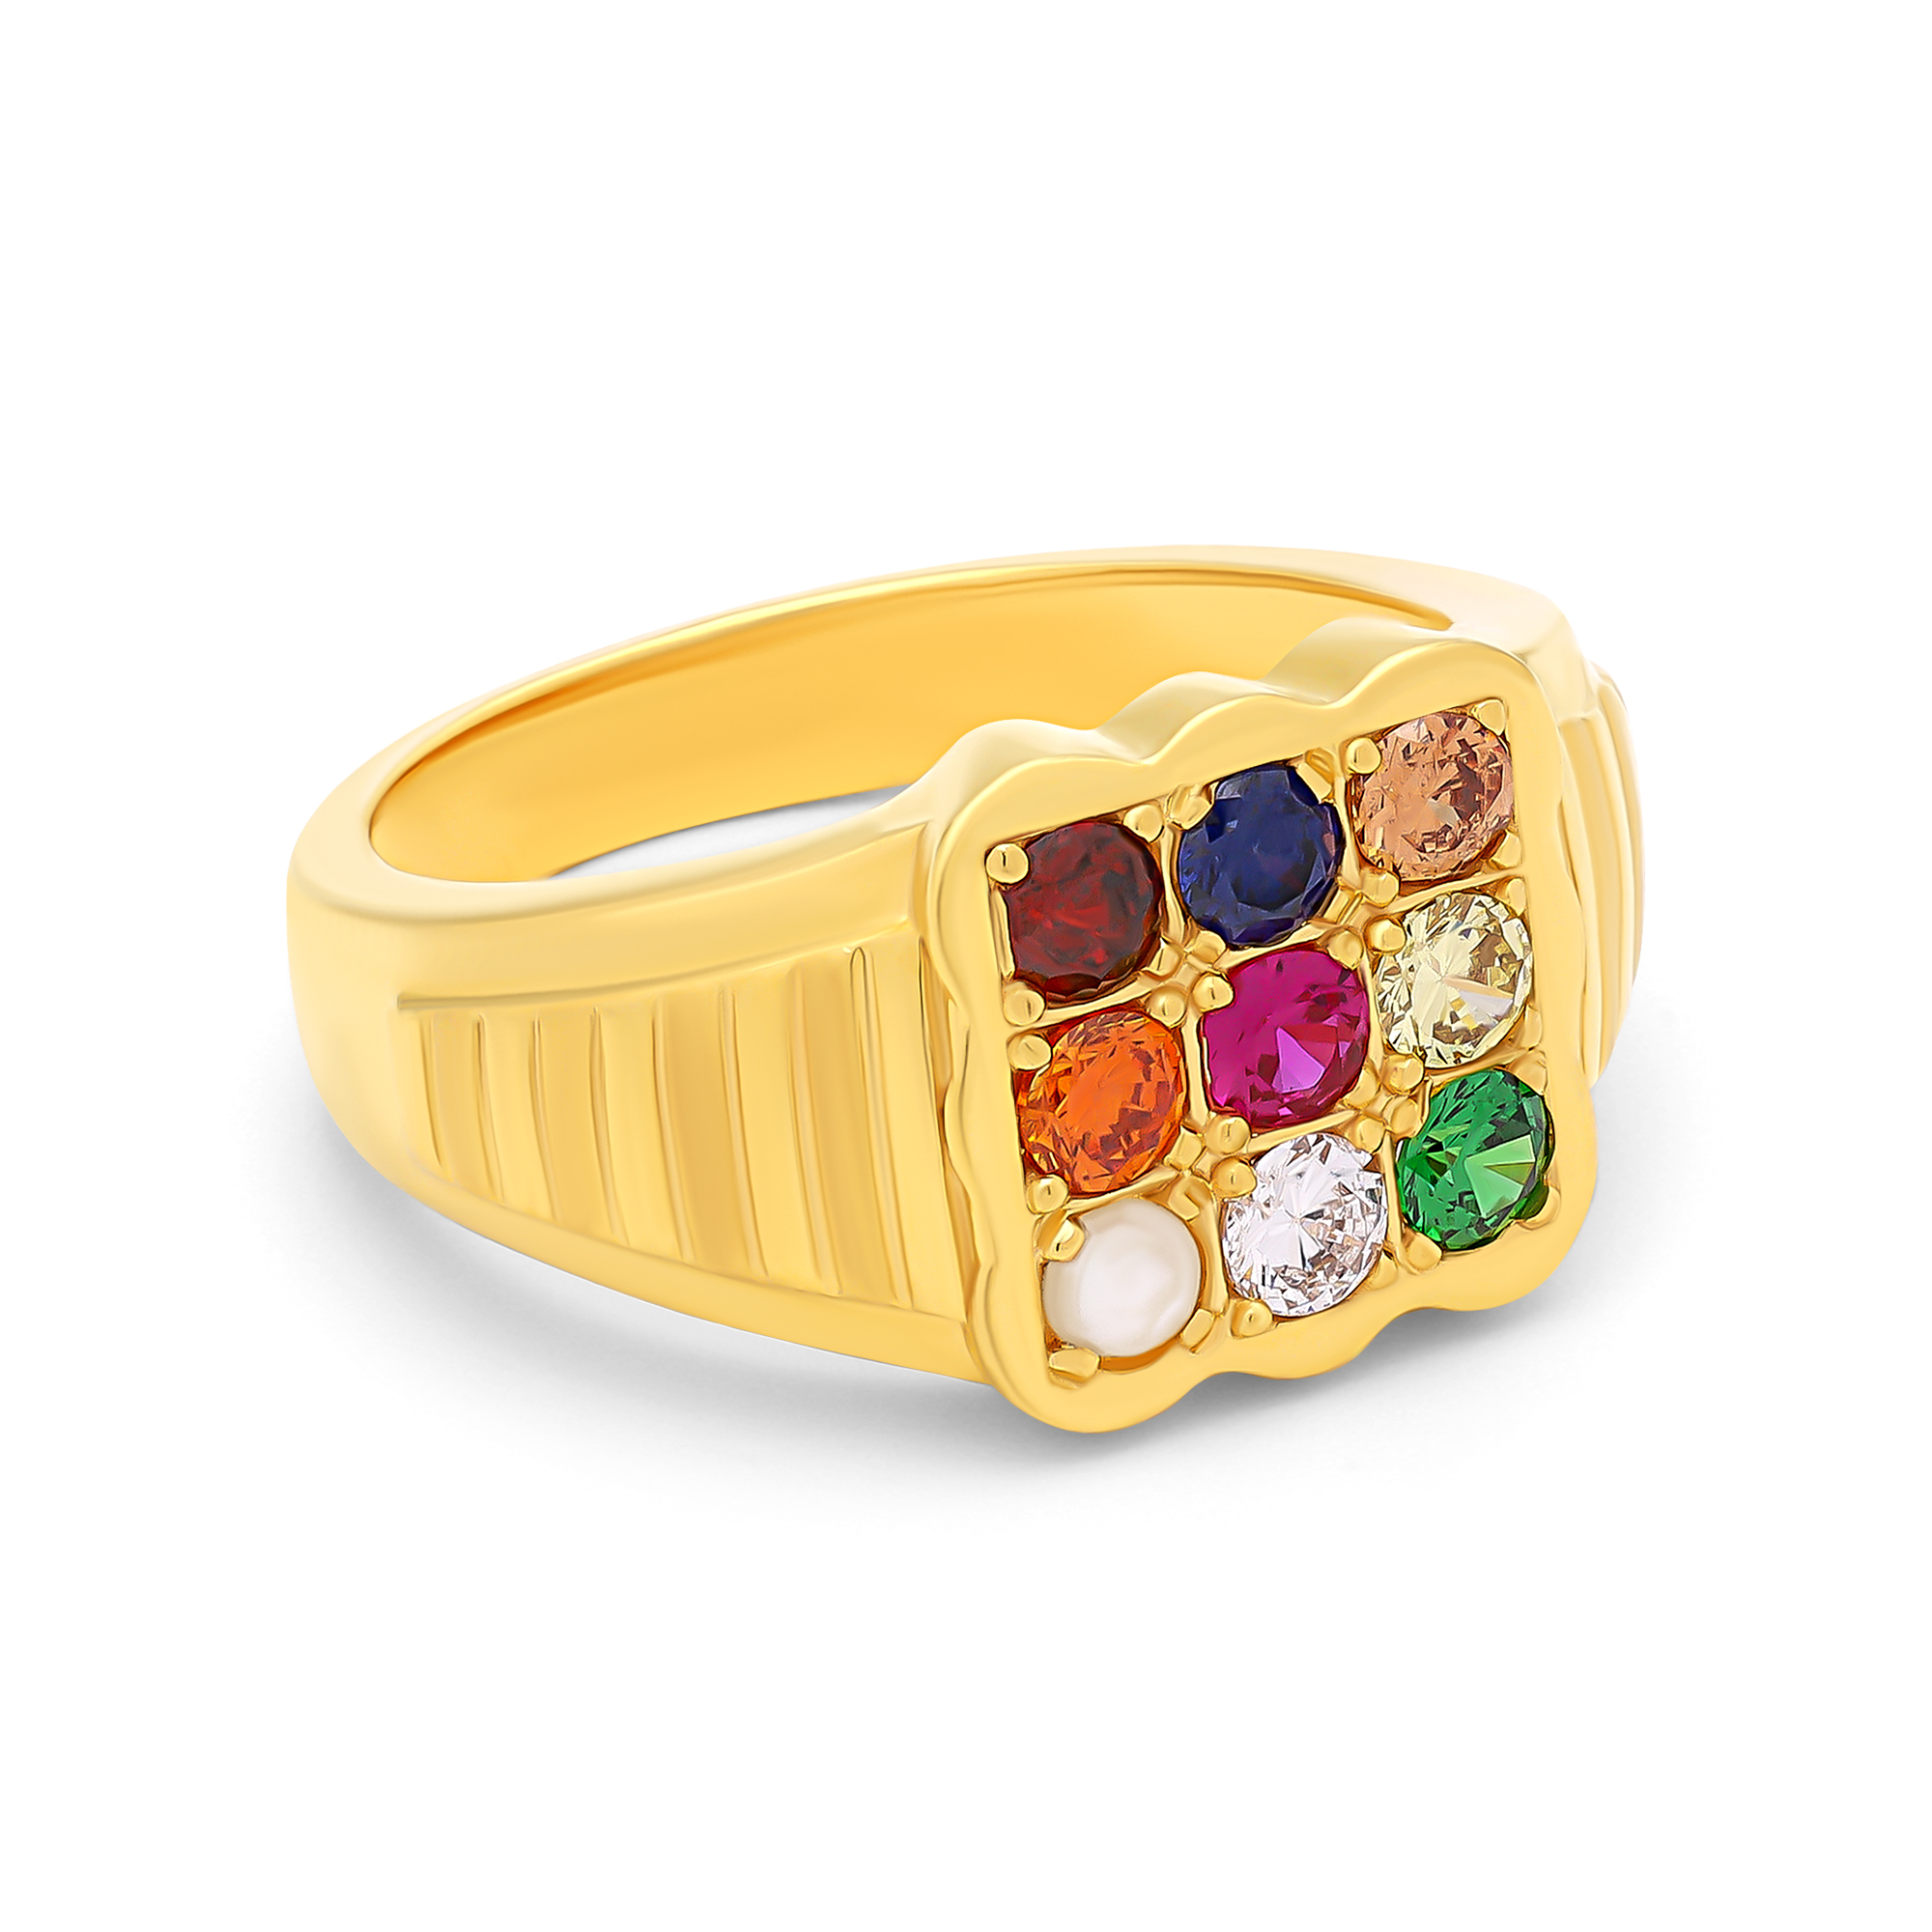 22K Gold Mens Navratna Ring - RiMs18448 - 22k Gold Navaratna ring for  Men's. Ring is designed with studded Precious stones (Ruby, Emerald, Sap